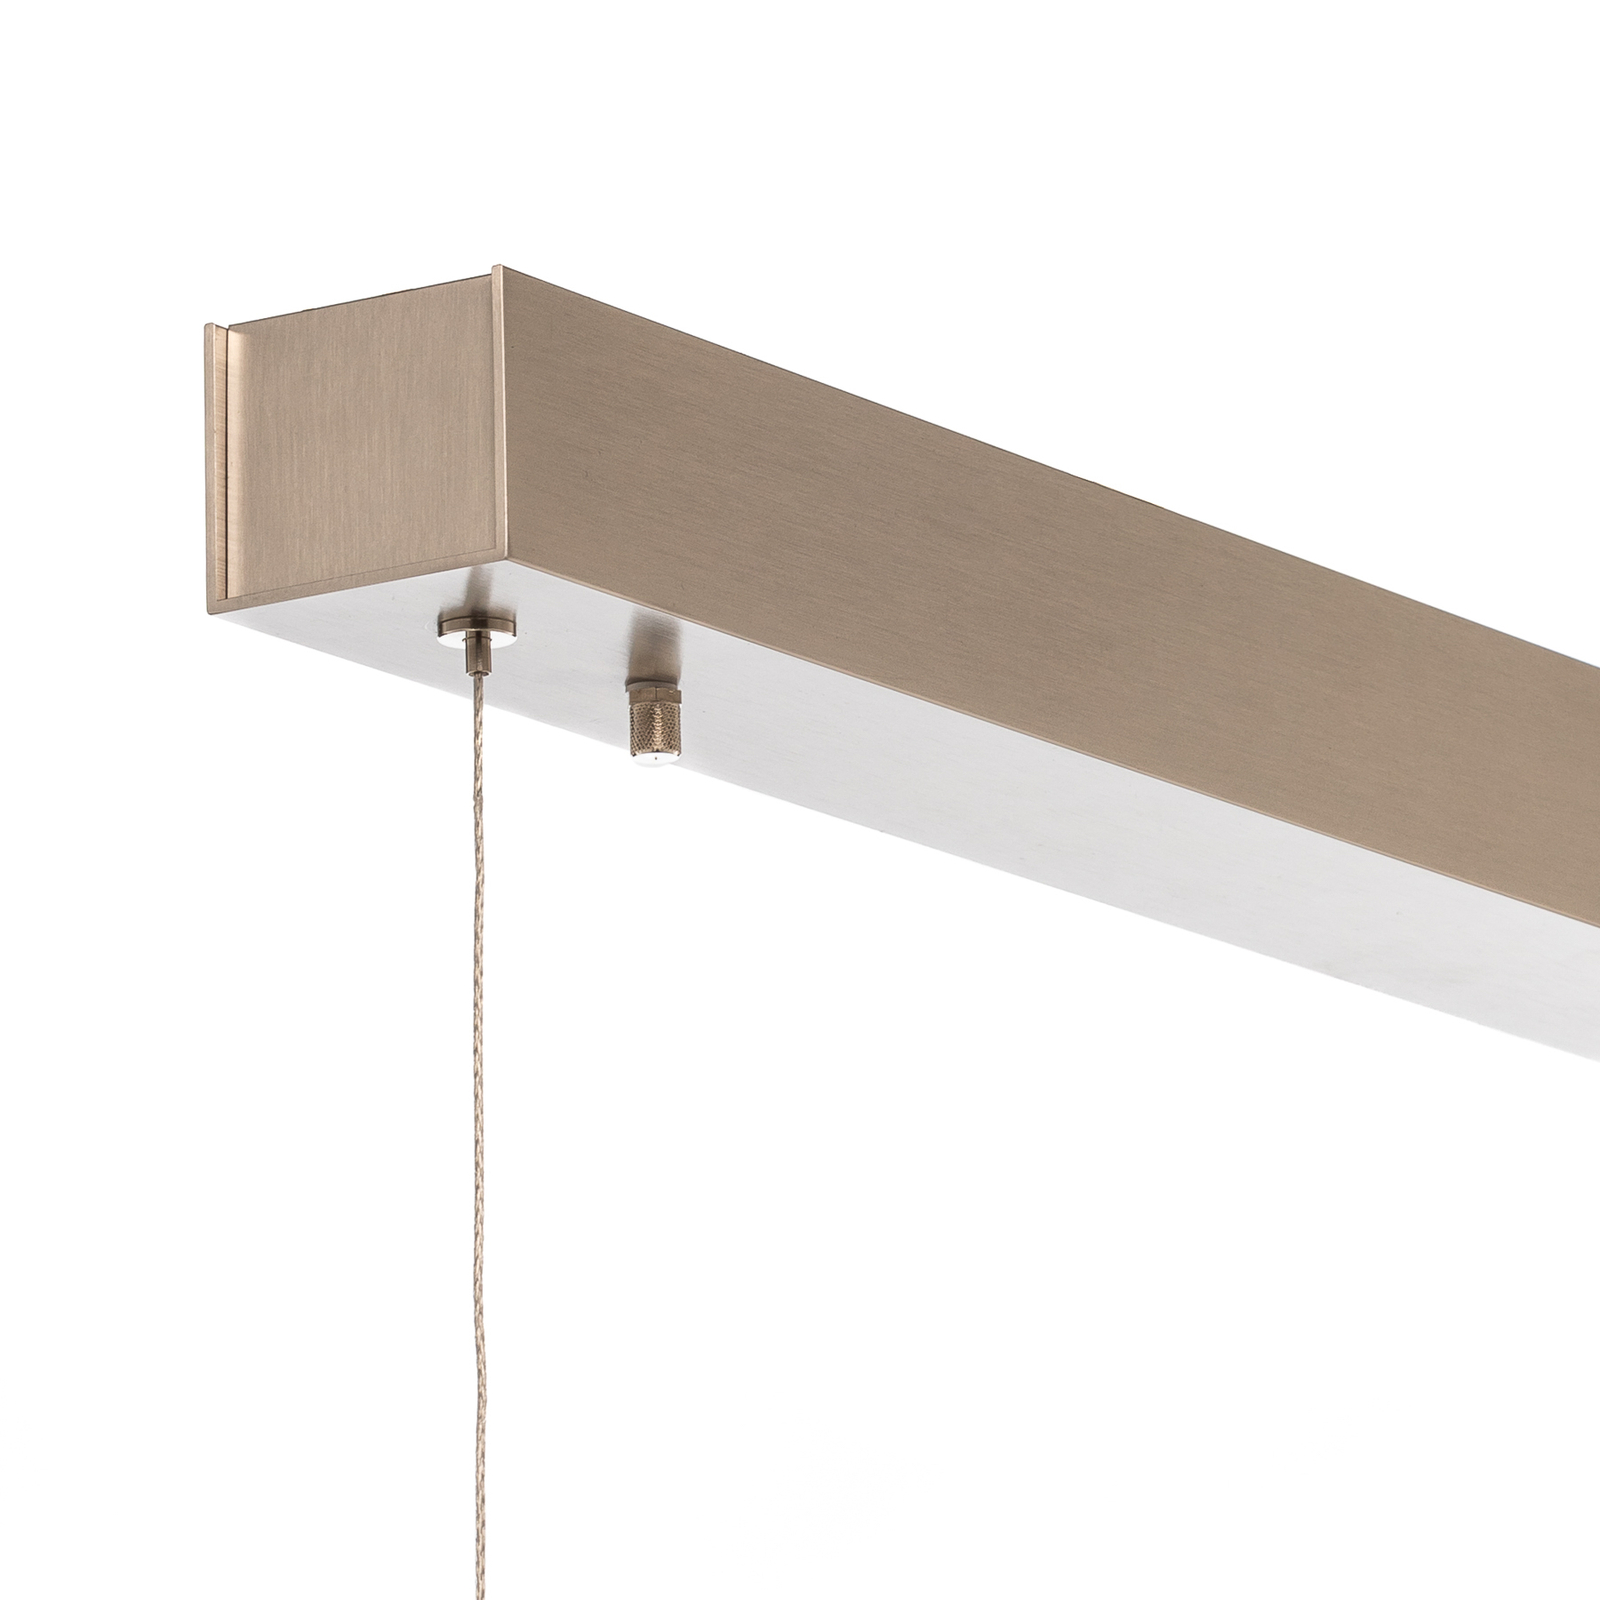 Quitani hanglamp Kiera, eiken/nikkel, 118 cm